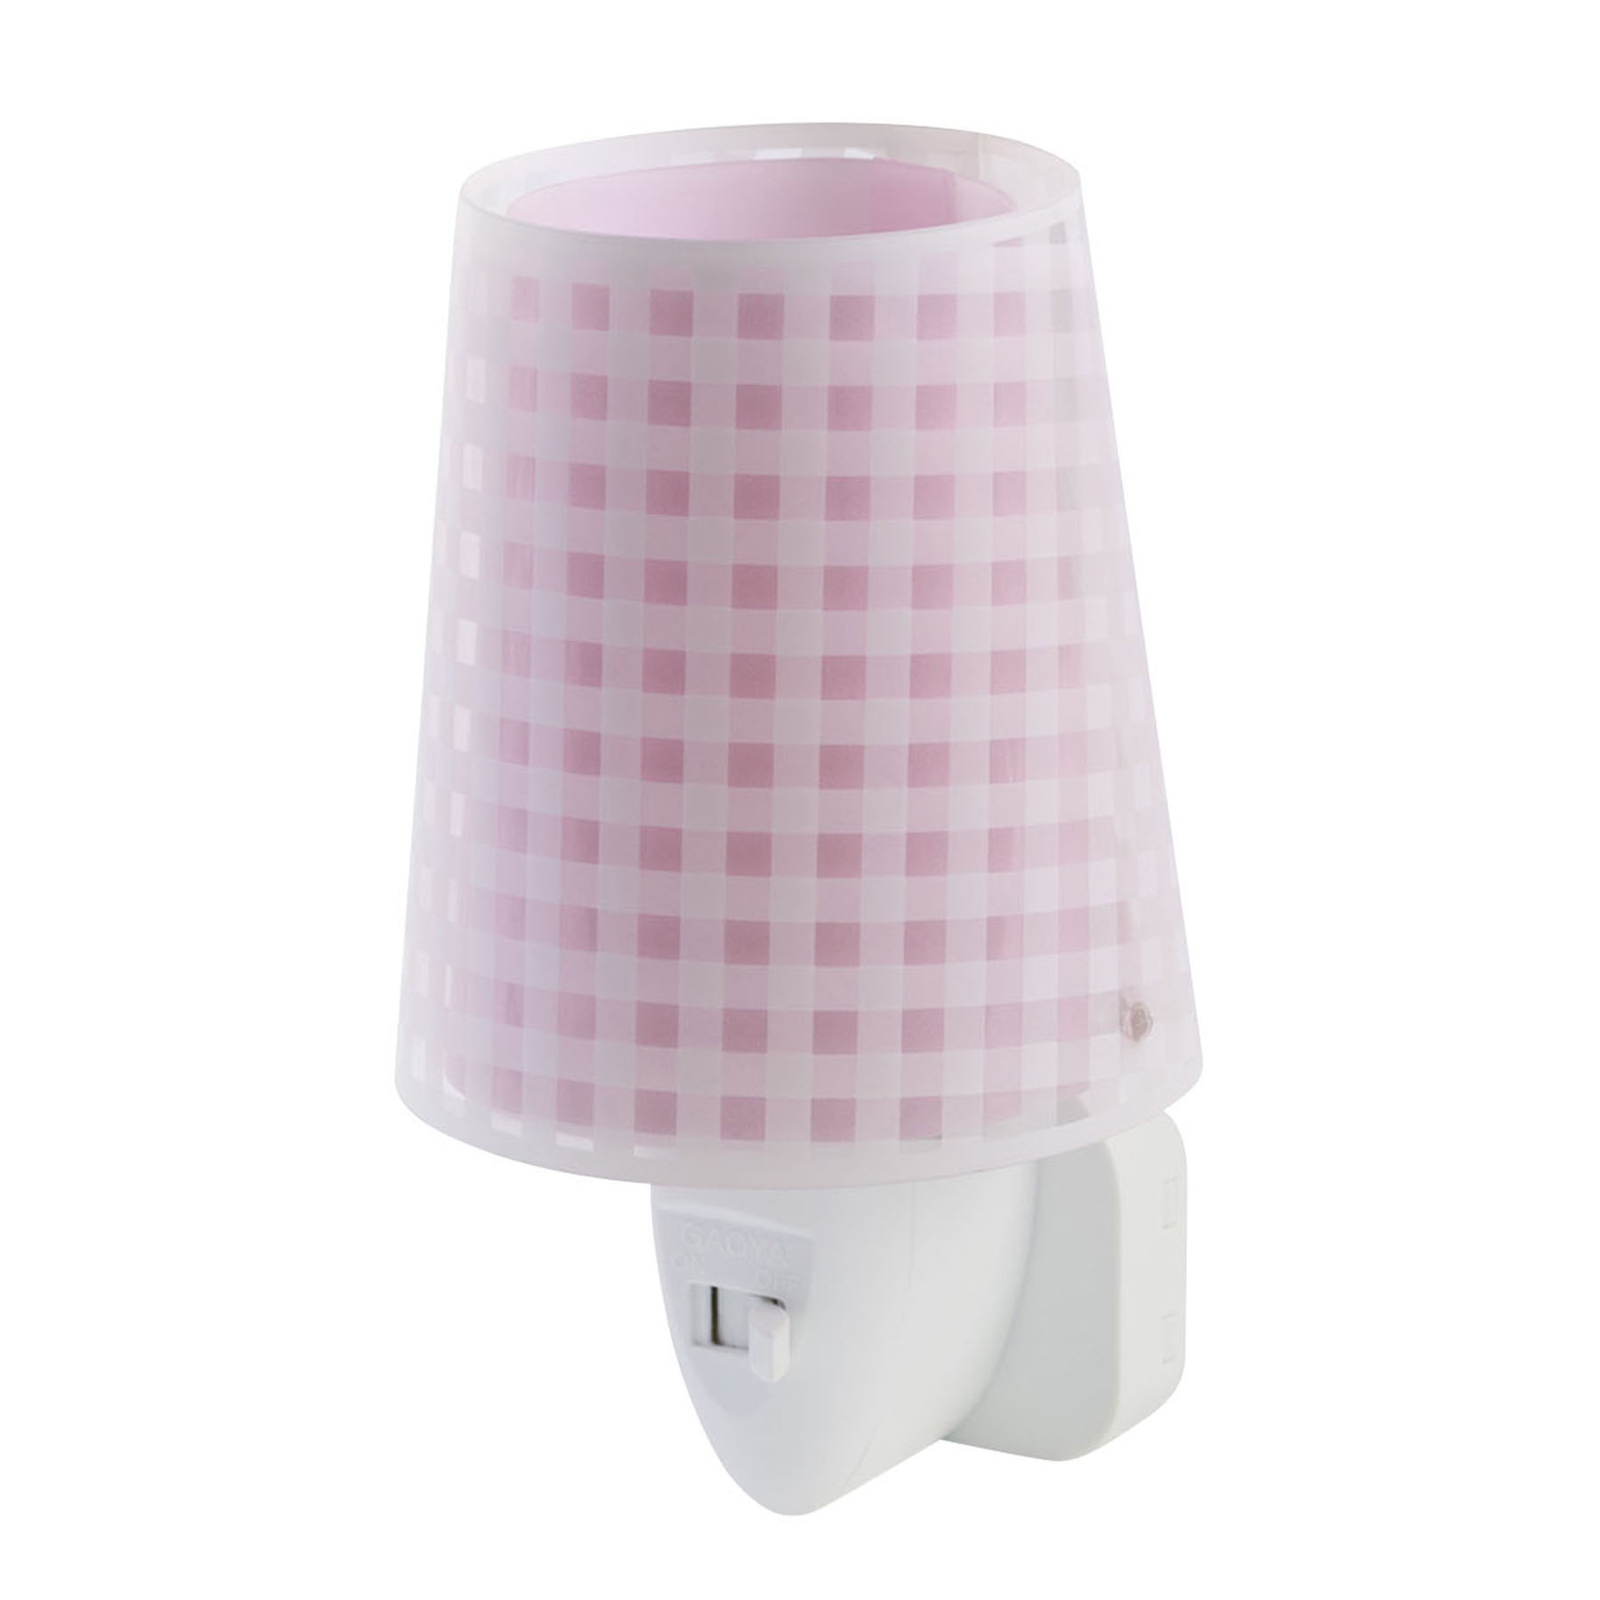 LED nachtlamp Vichy in roze